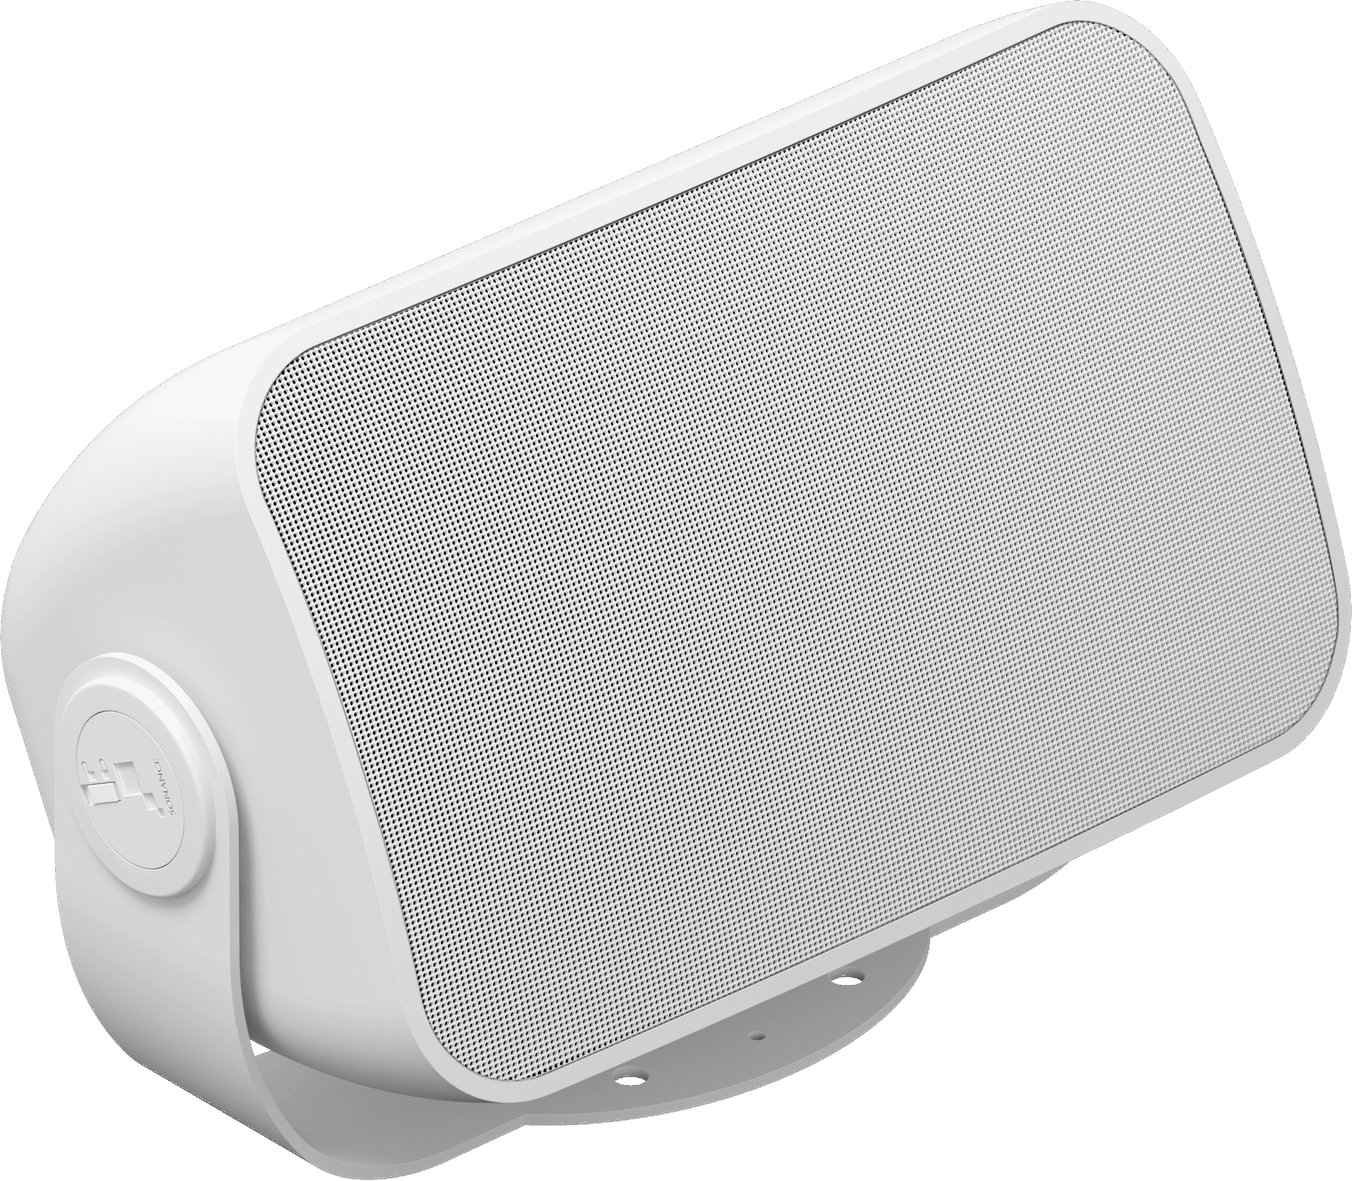 sonos white outdoor speaker side view